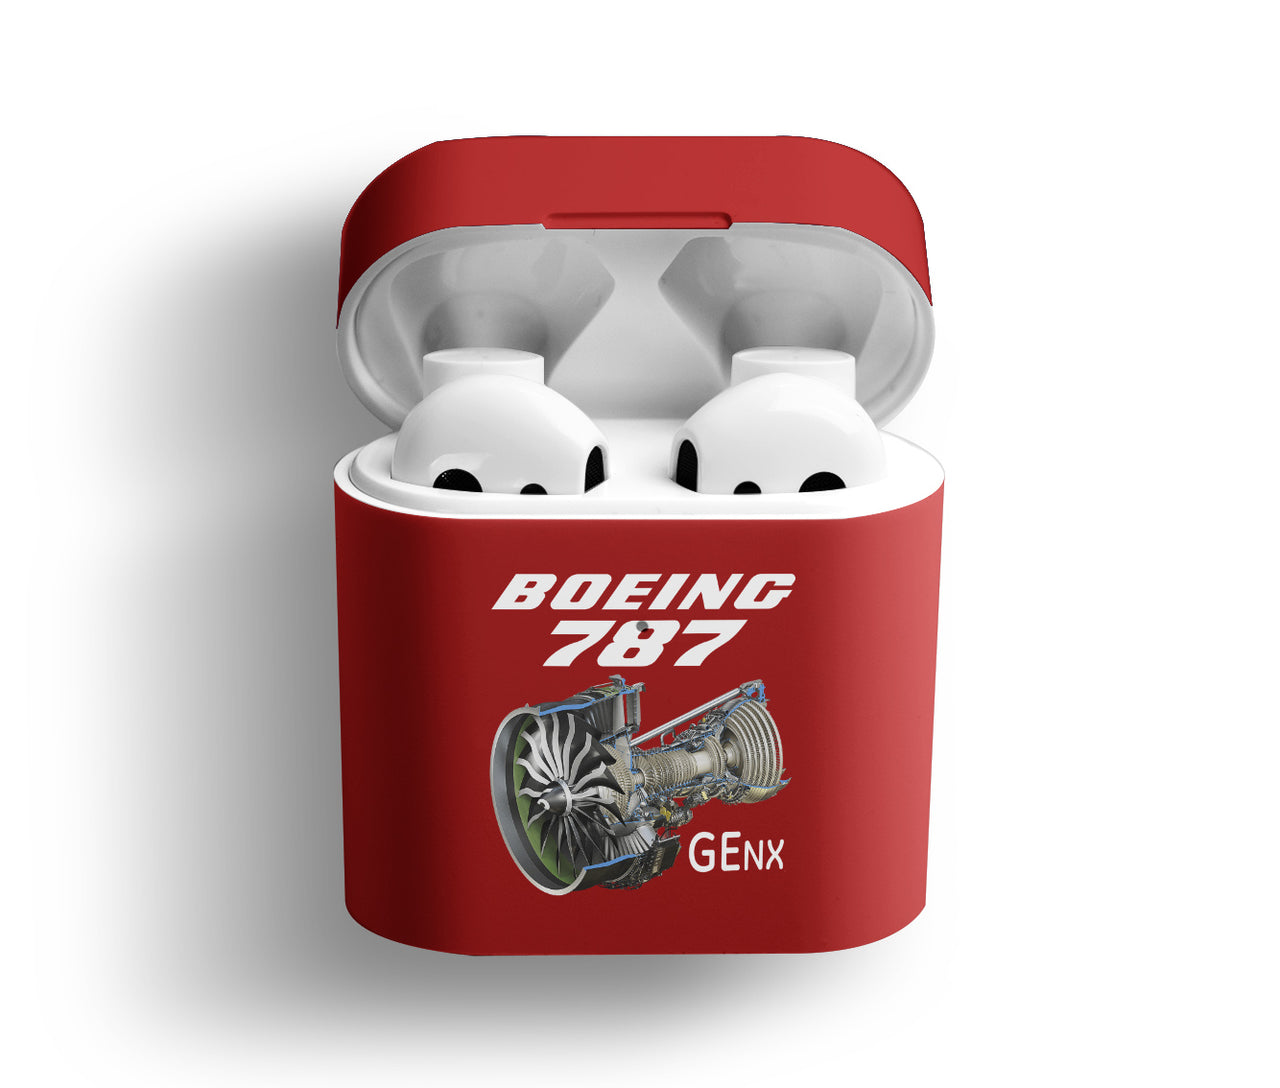 Boeing 787 & GENX Engine Designed AirPods  Cases